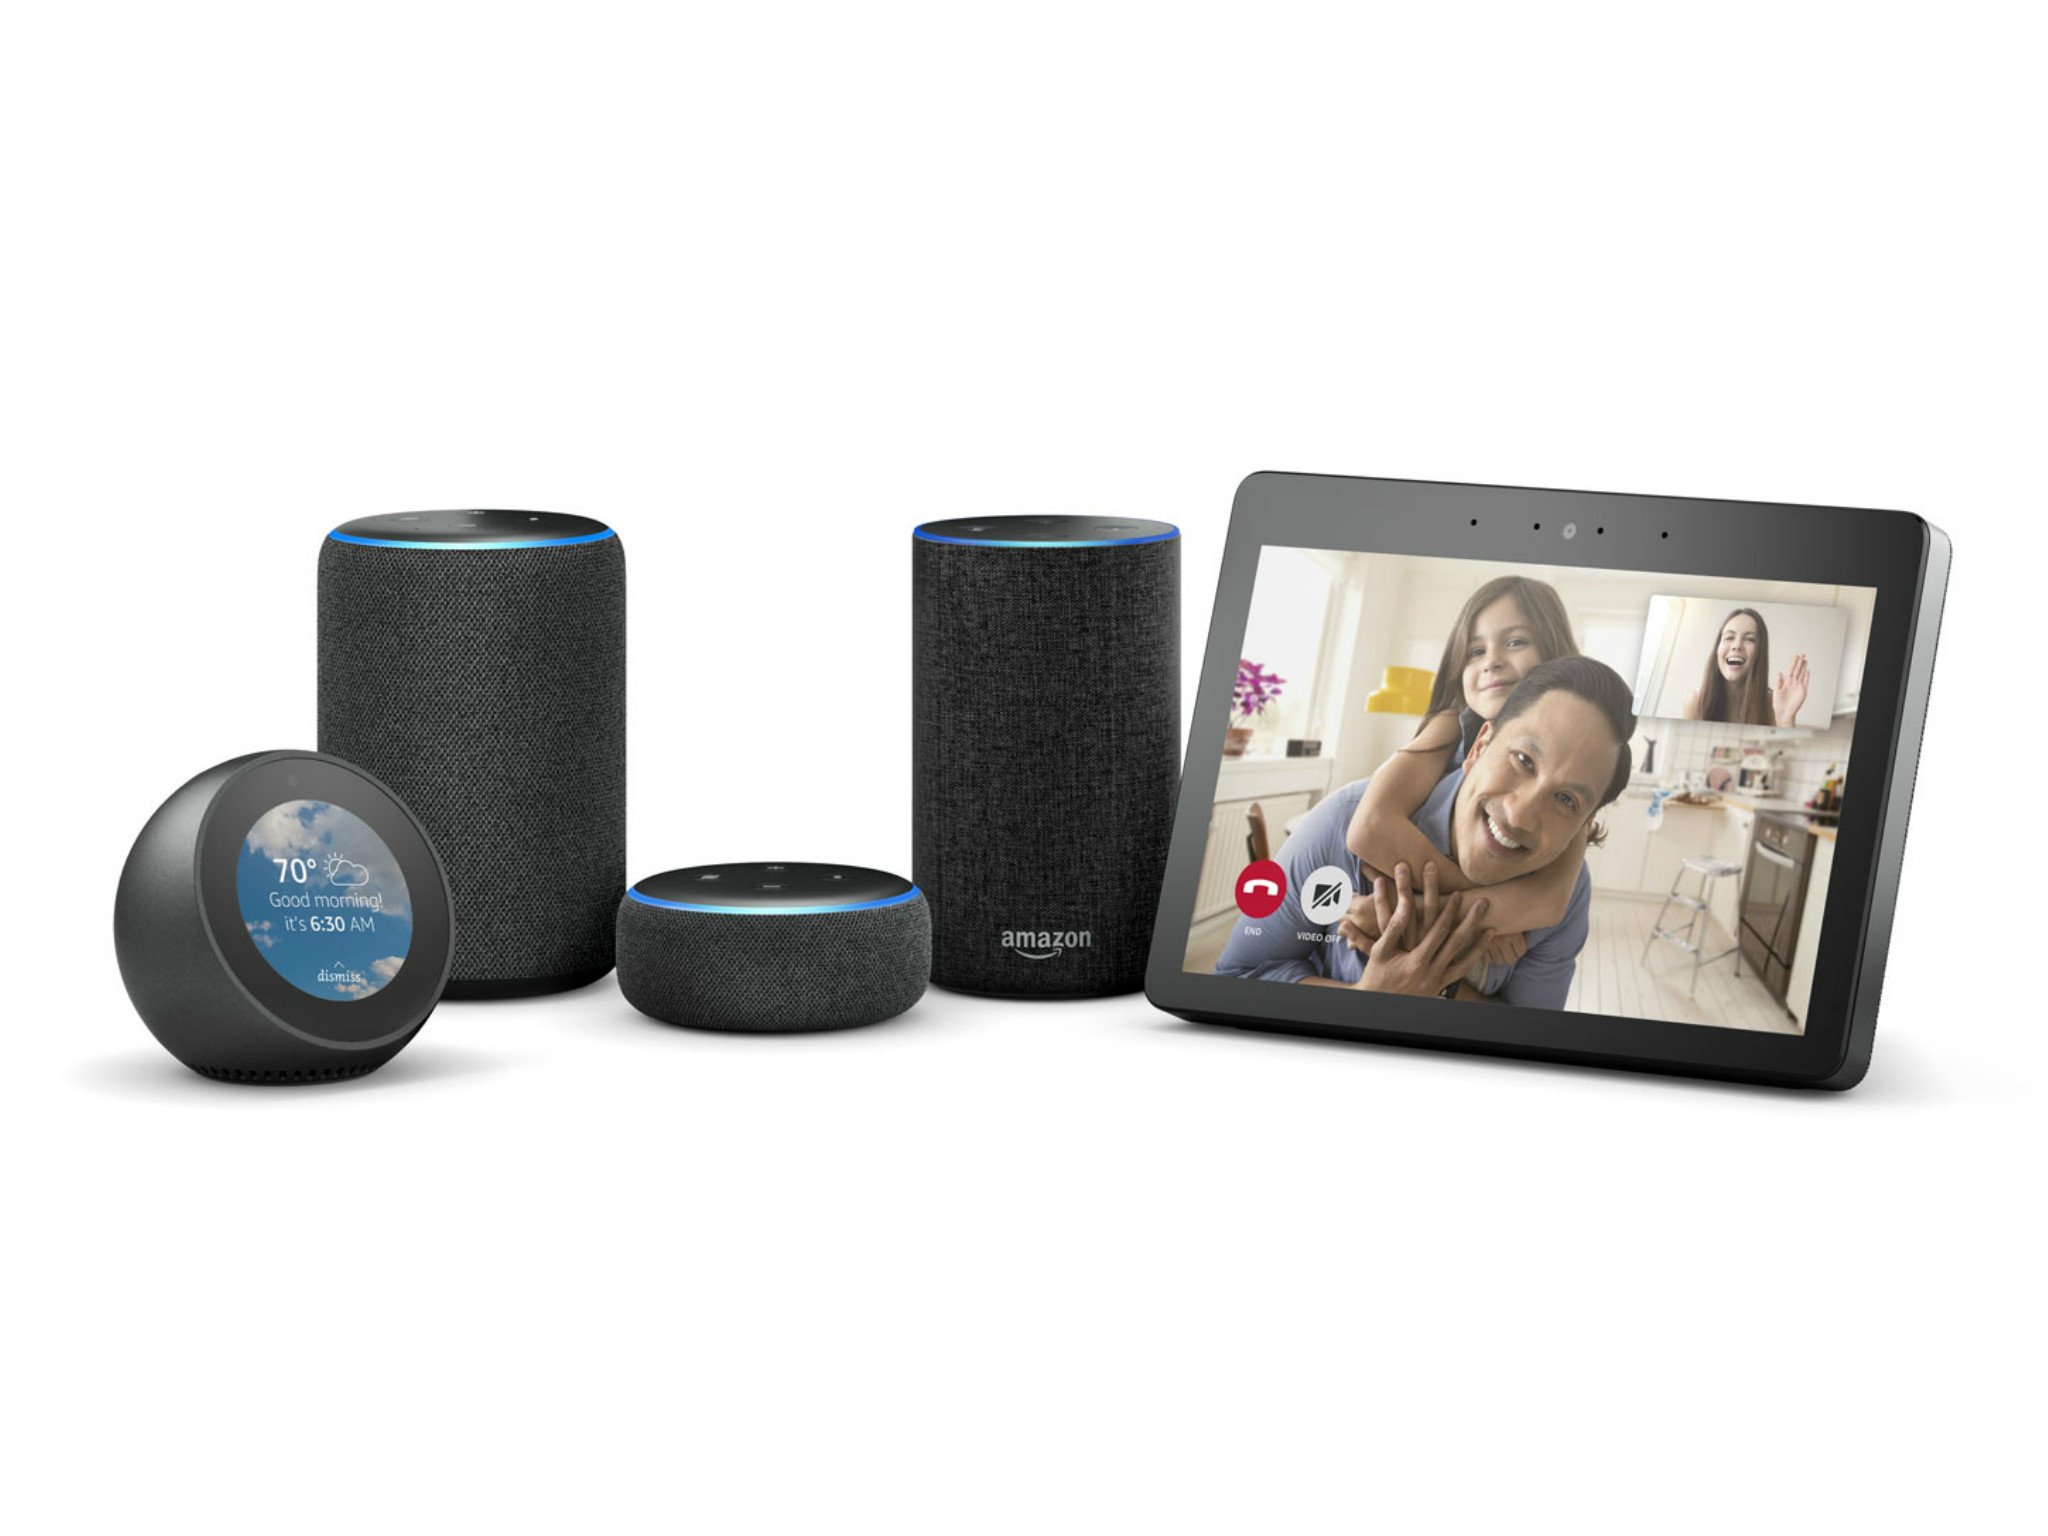 Skype calling and Pandora Premium arrive on Alexa devices